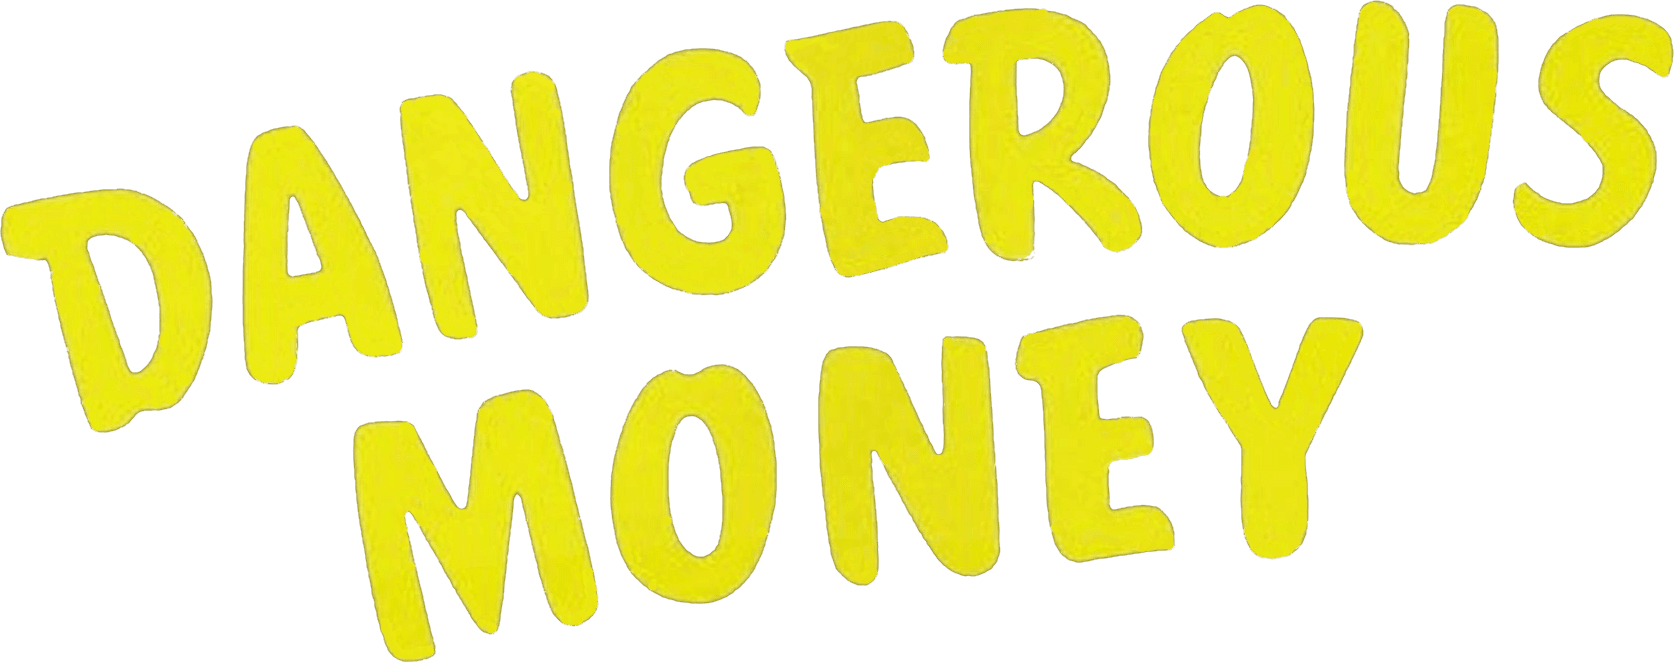 Dangerous Money logo